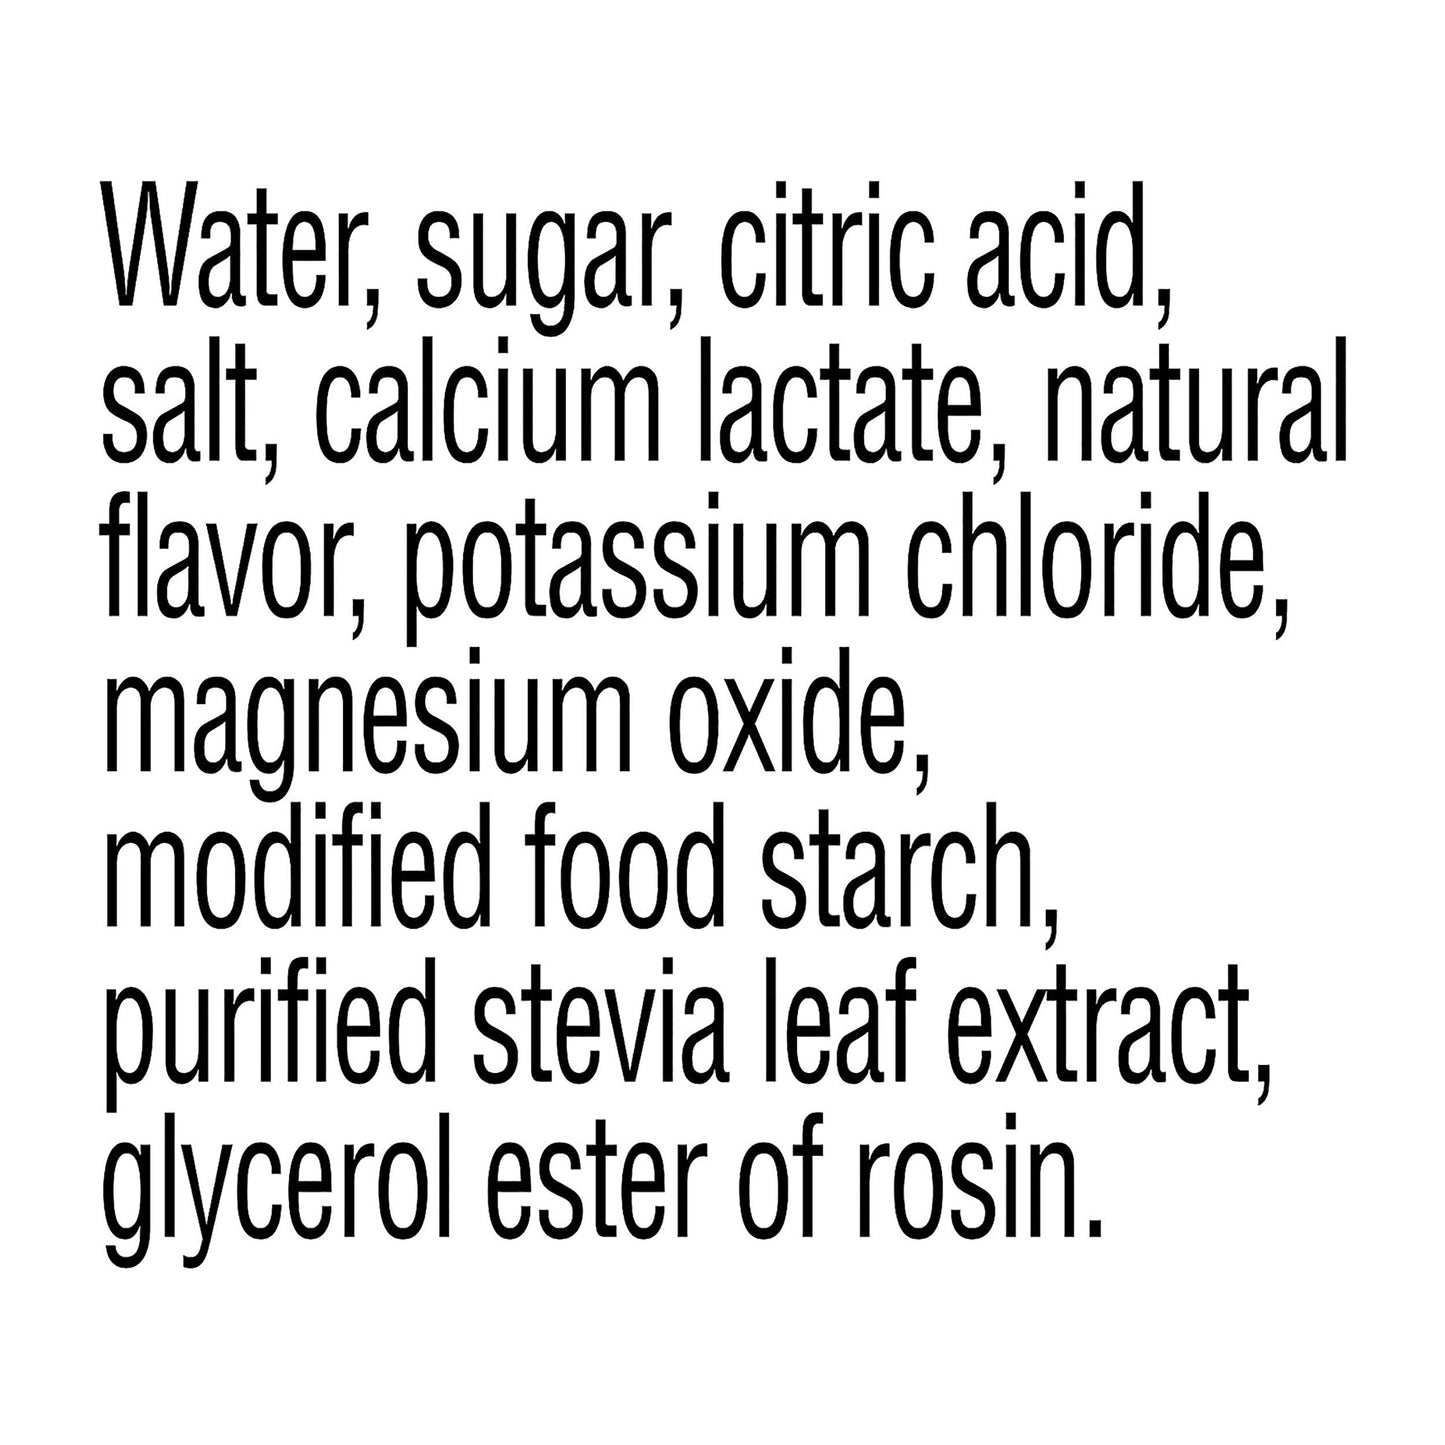 Gatorlyte Rapid Rehydration Electrolyte Beverage, Cherry Lime, 20 oz Bottle